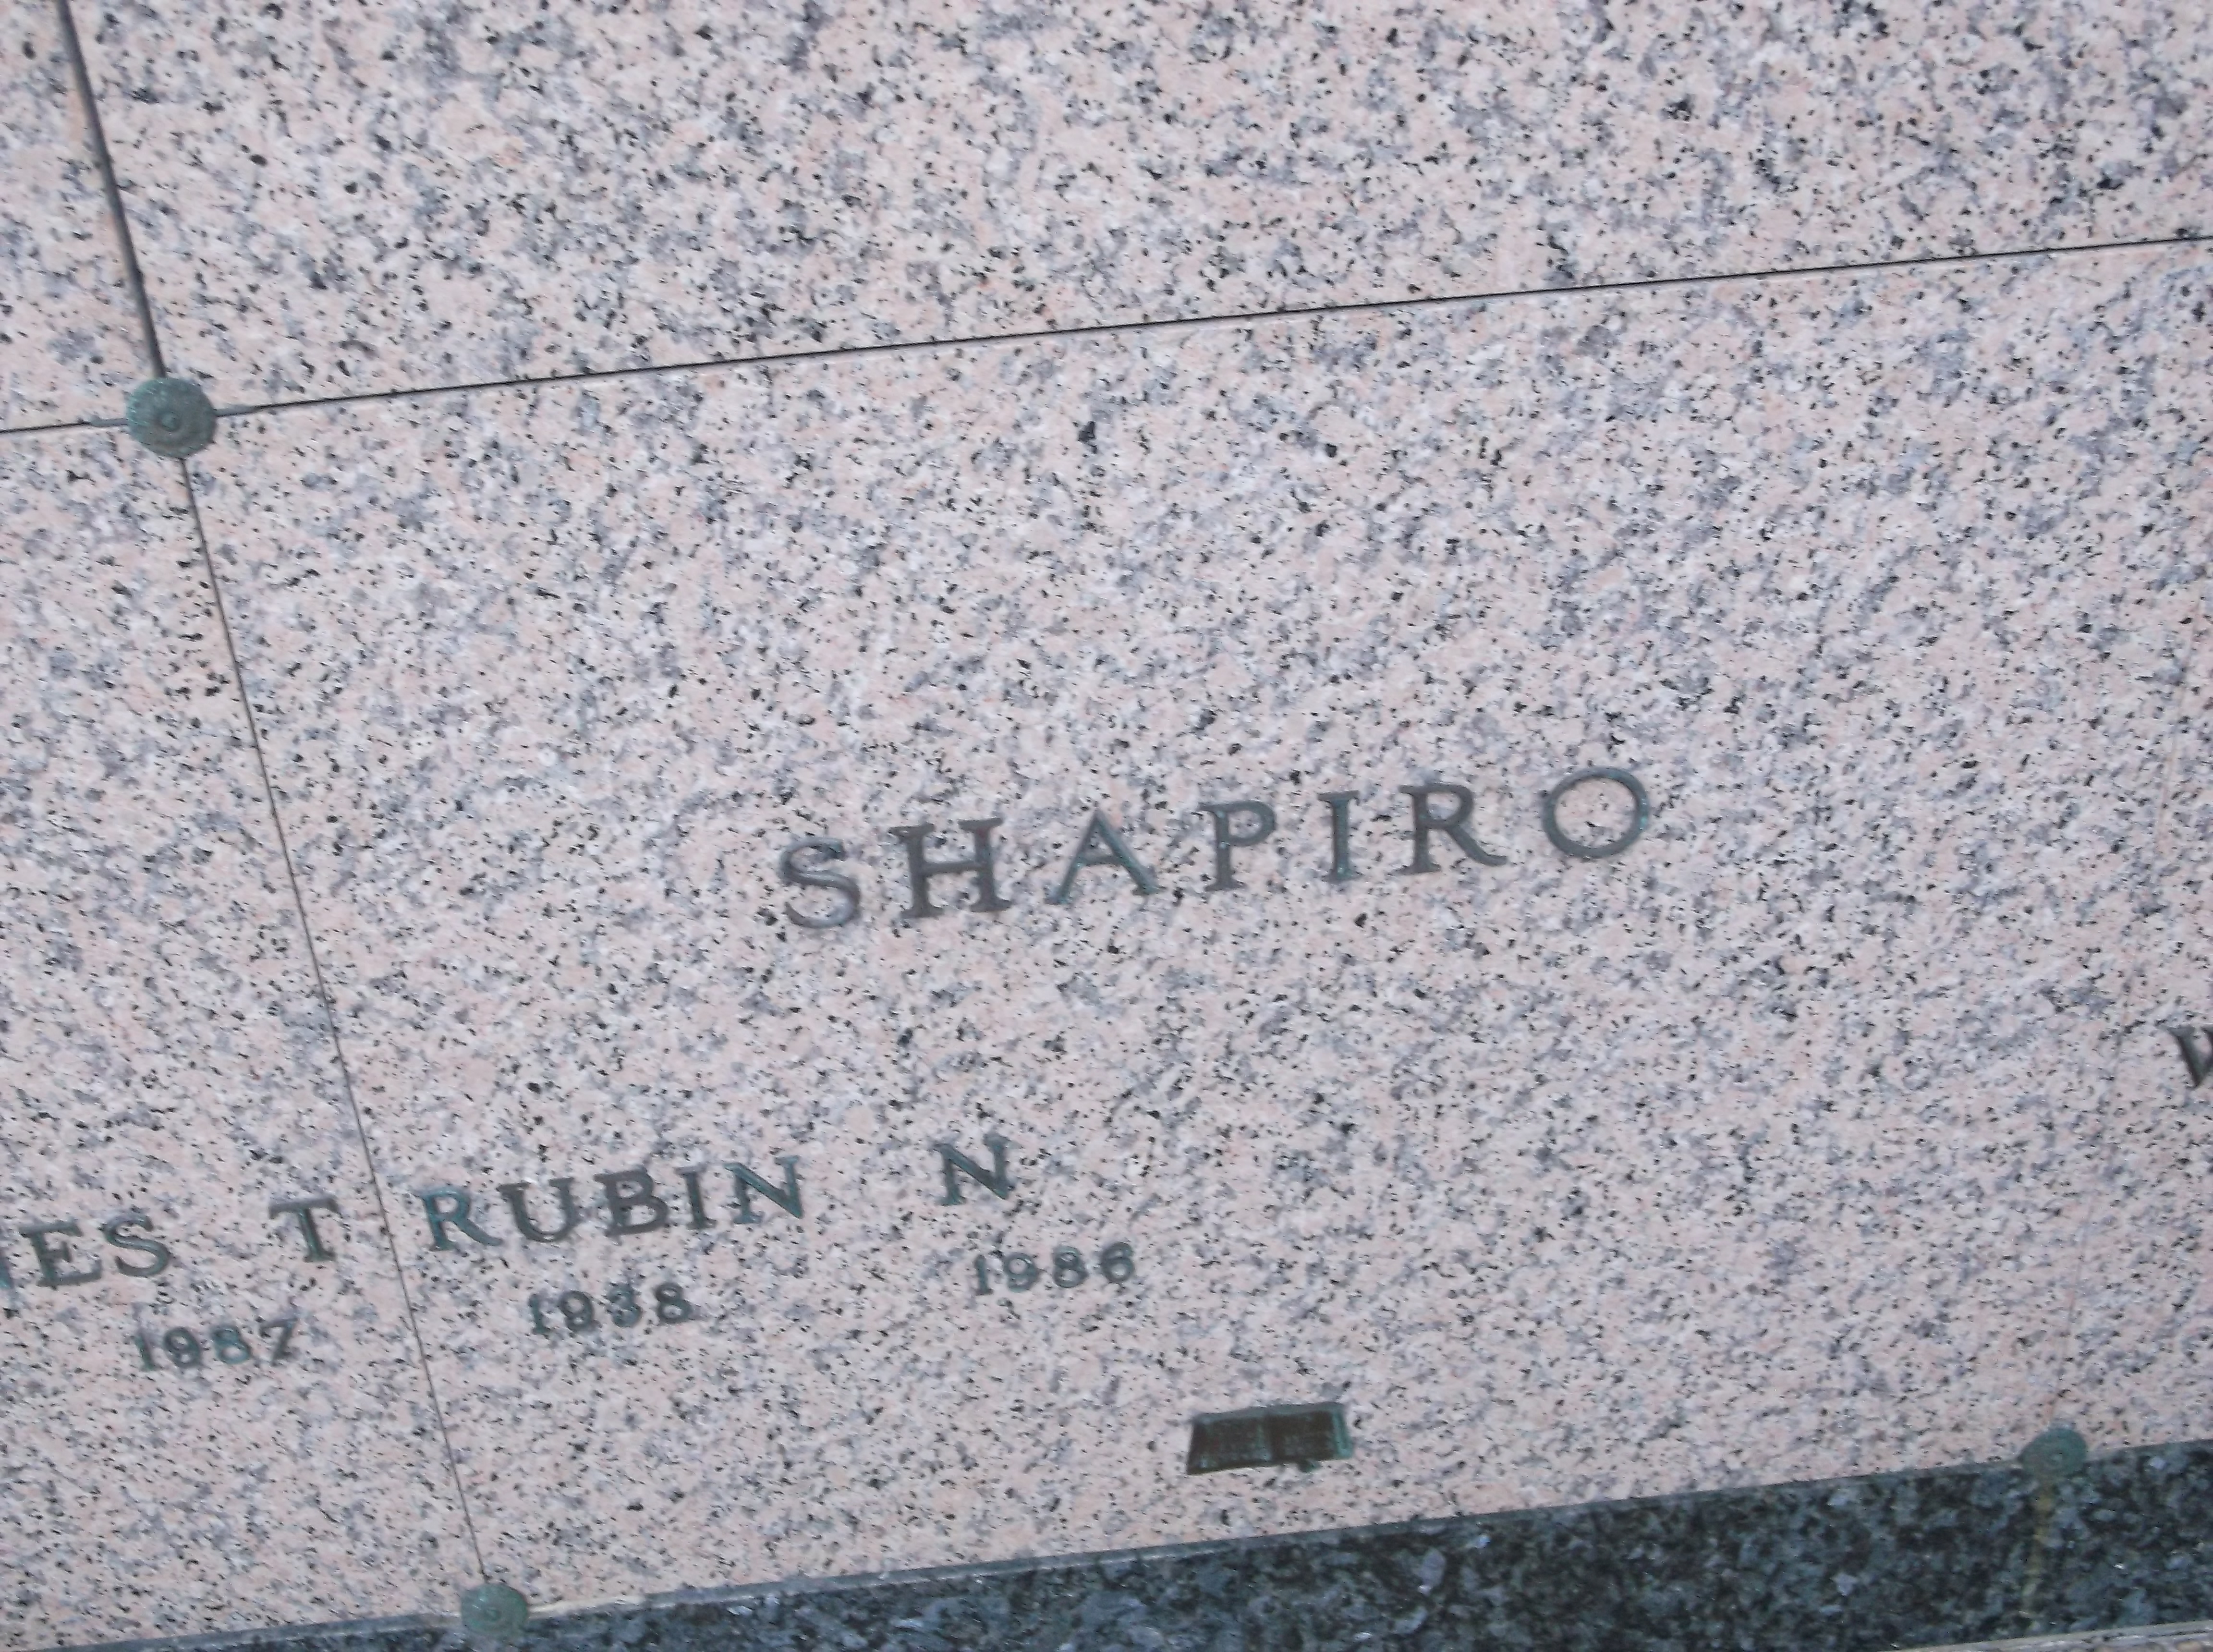 Rubin N Shapiro